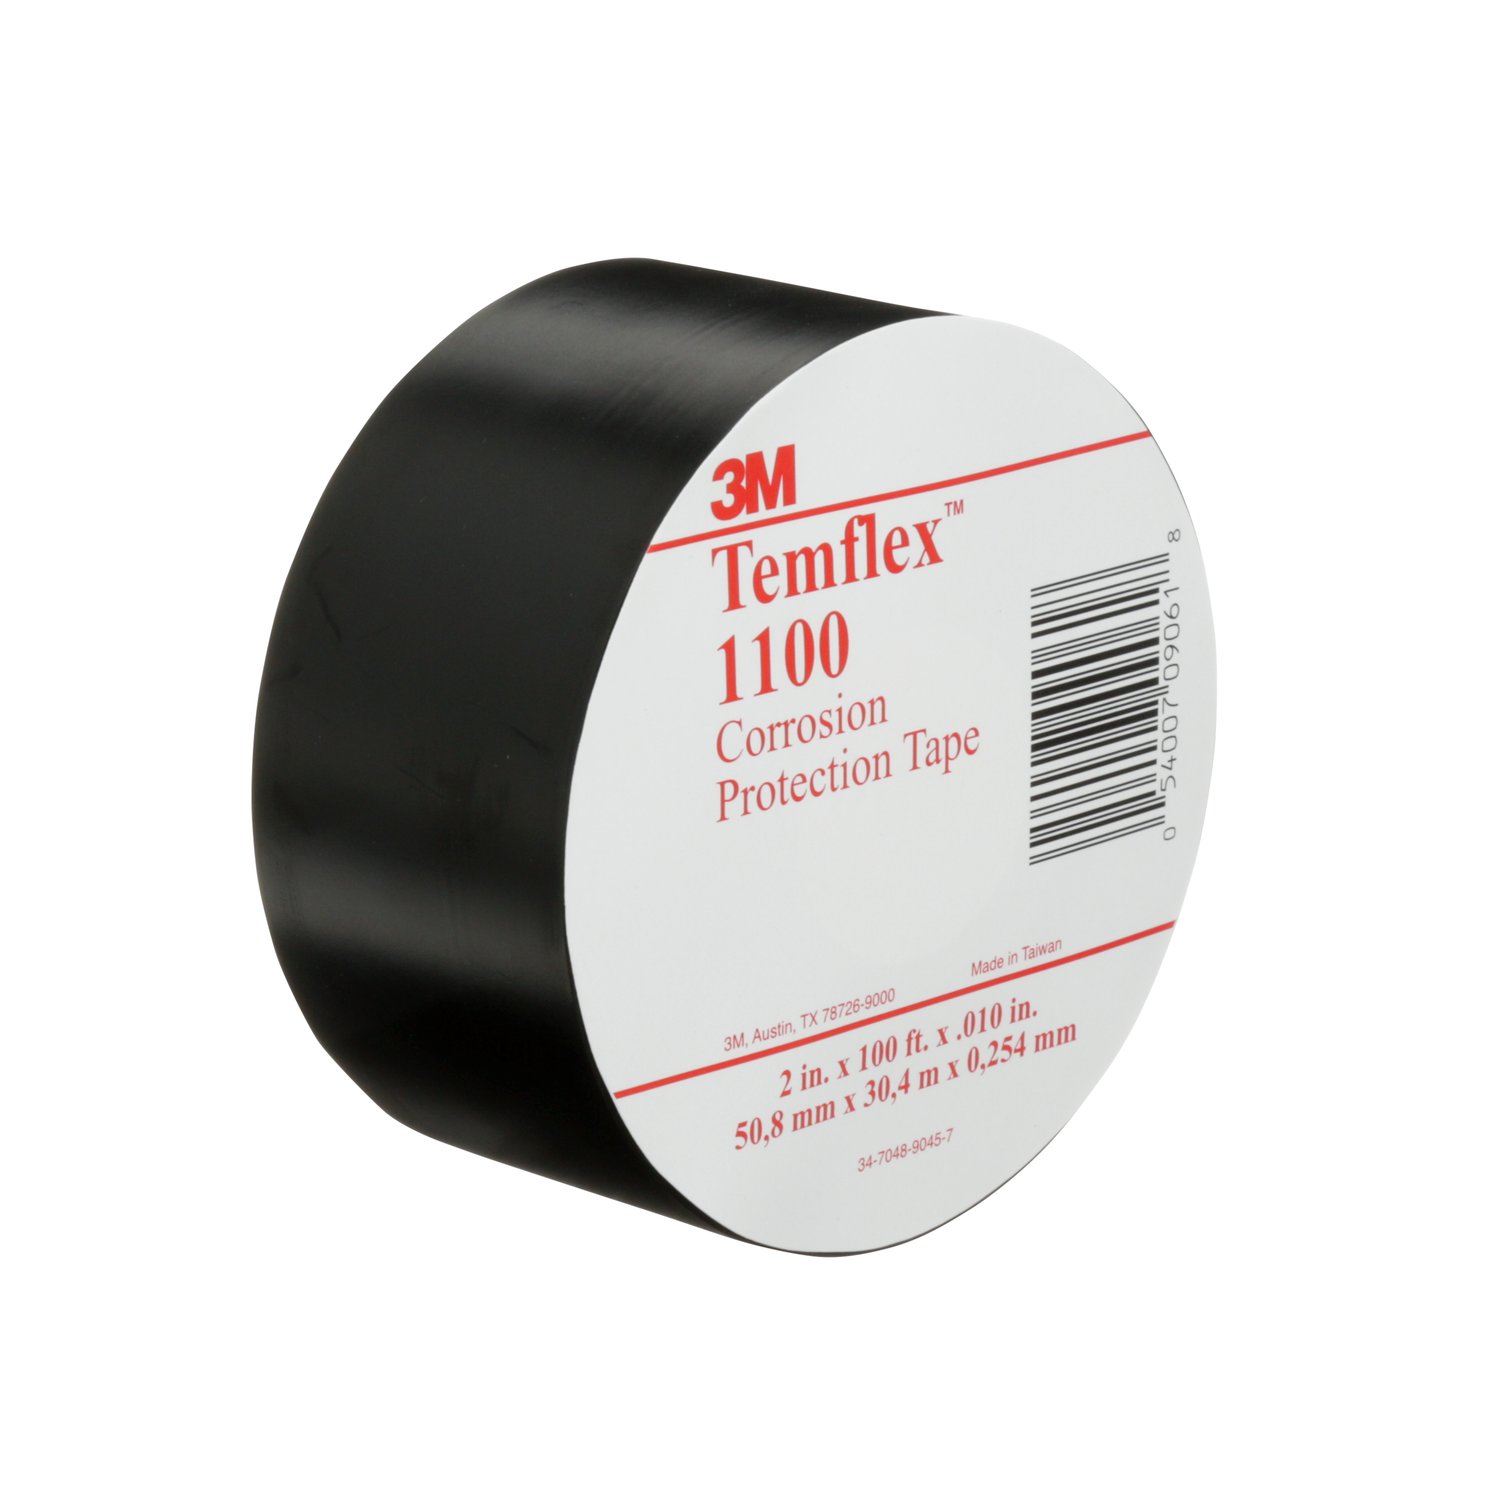 7000132166 - 3M Temflex Vinyl Corrosion Protection Tape 1100, 2 in x 100 ft,
Printed, Black, 4 rolls/carton, 24 rolls/Case